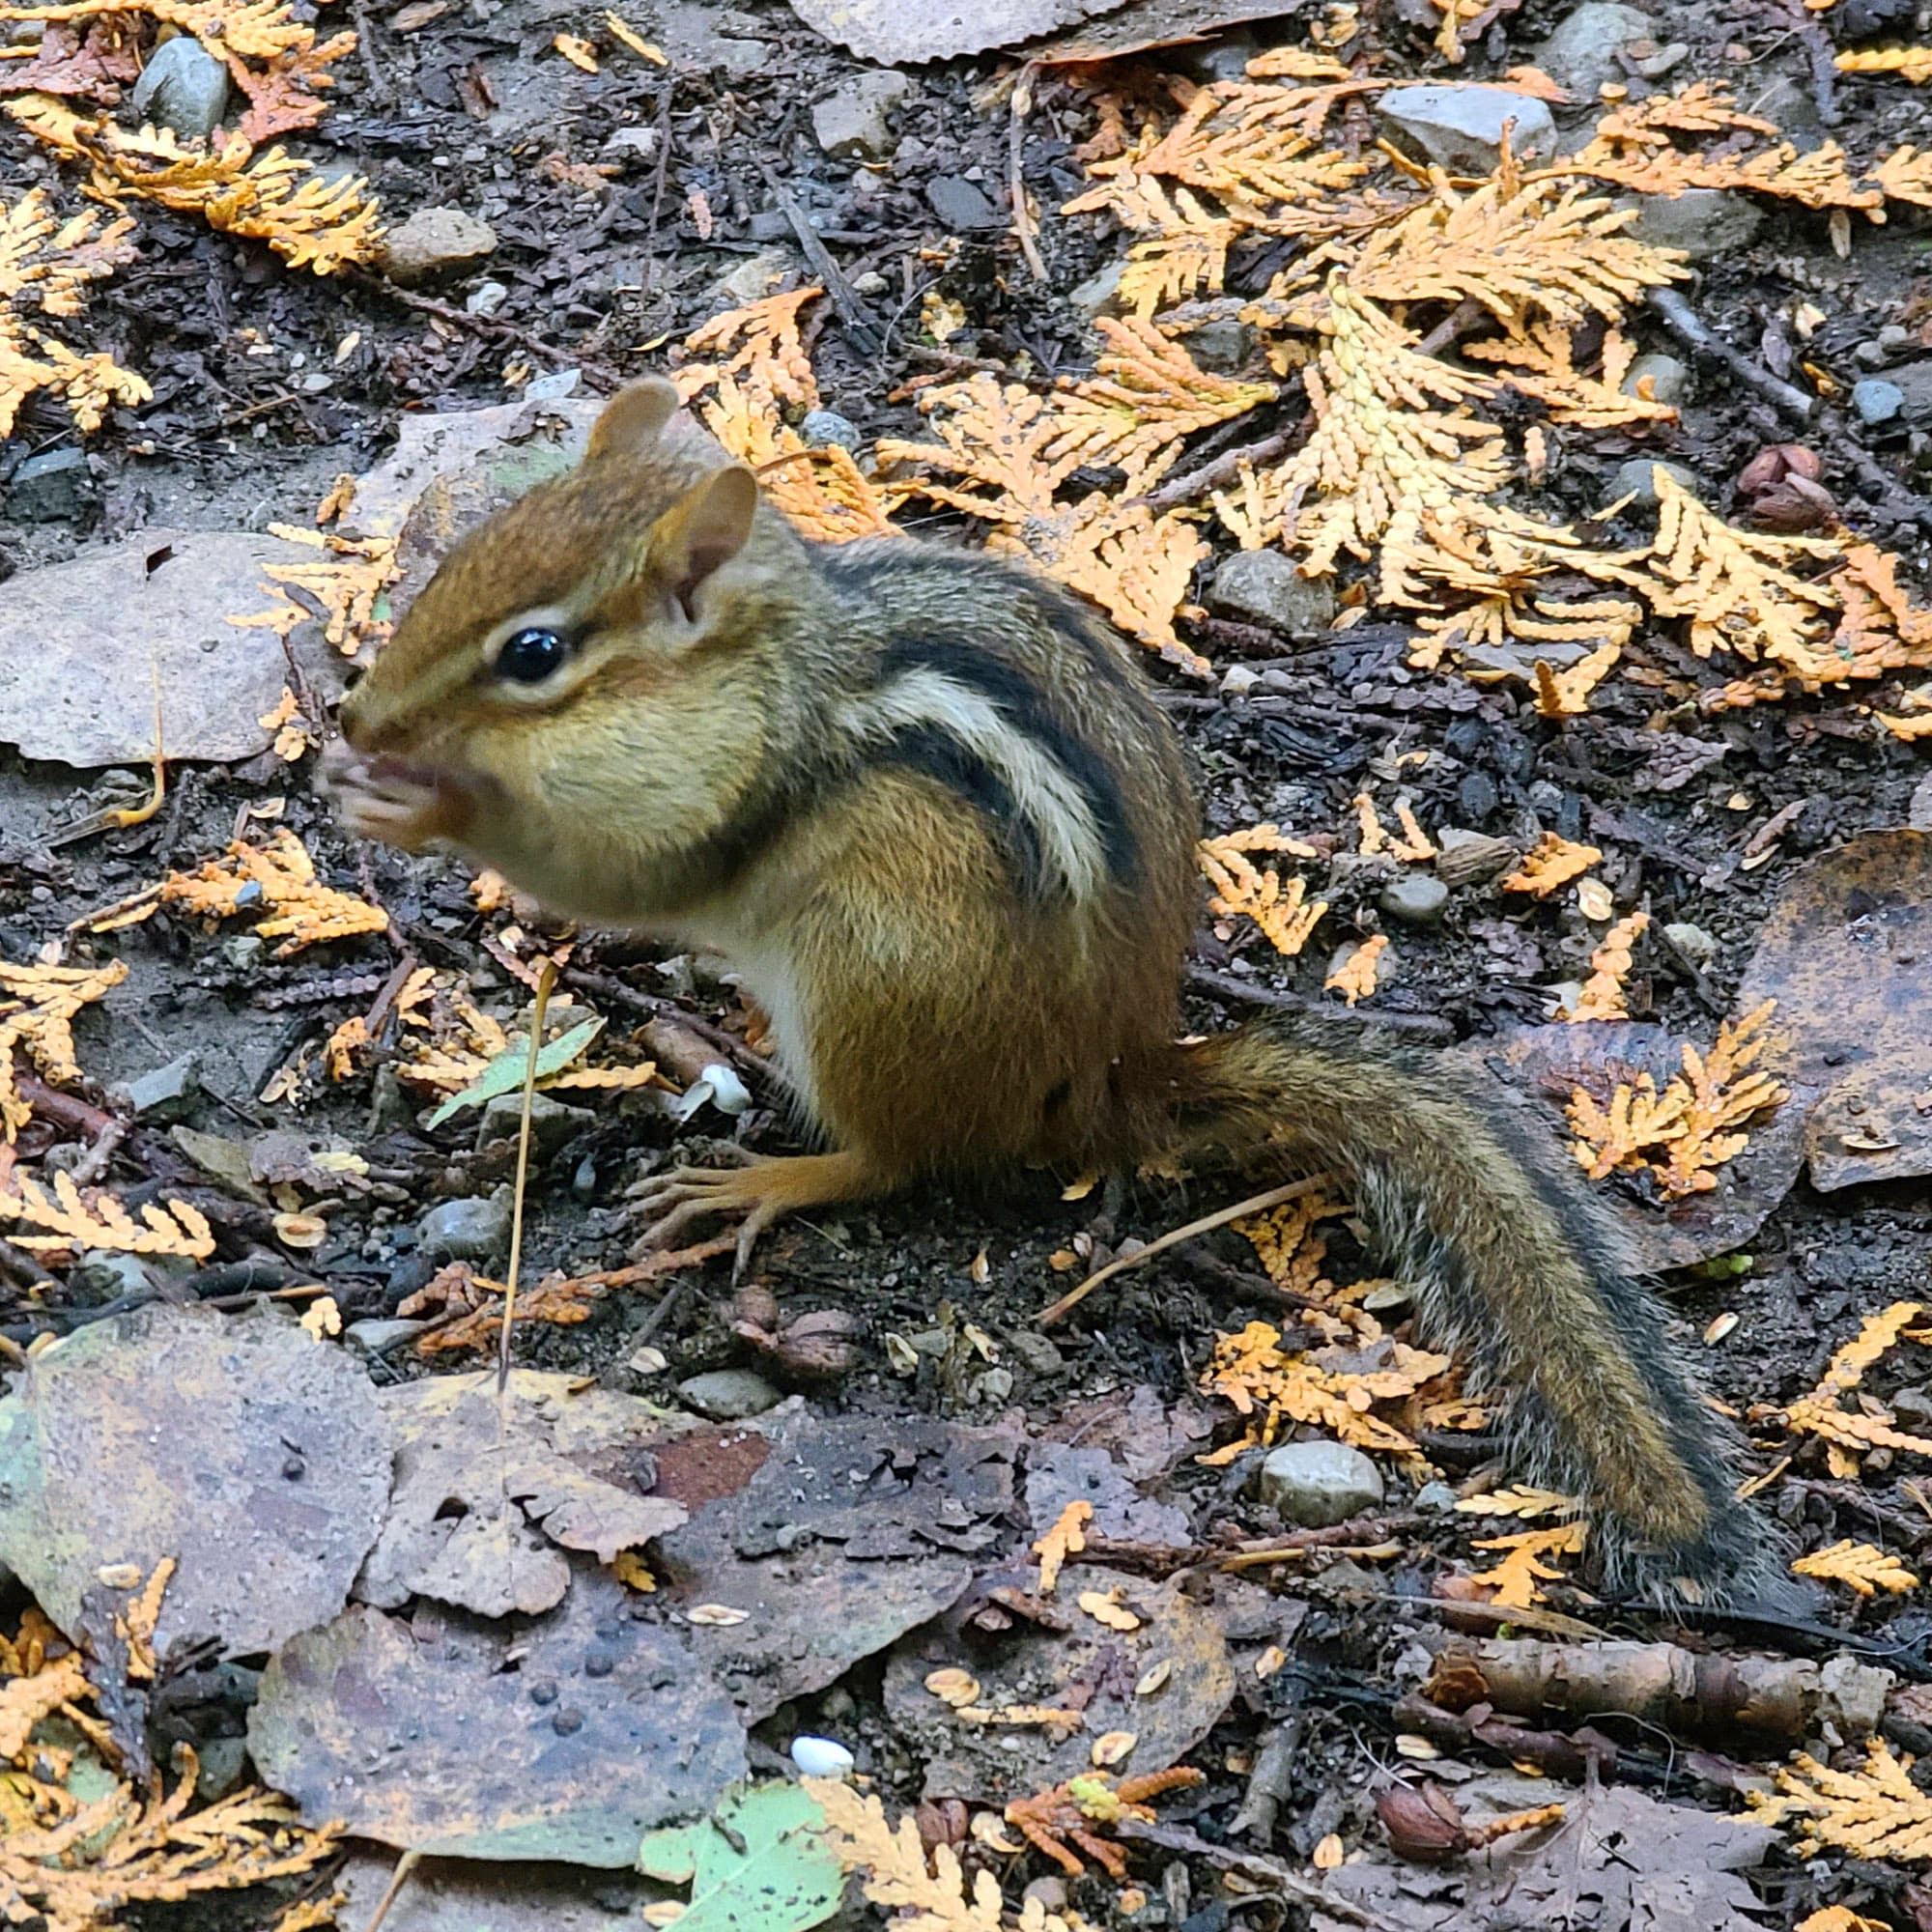 A small chipmunk.